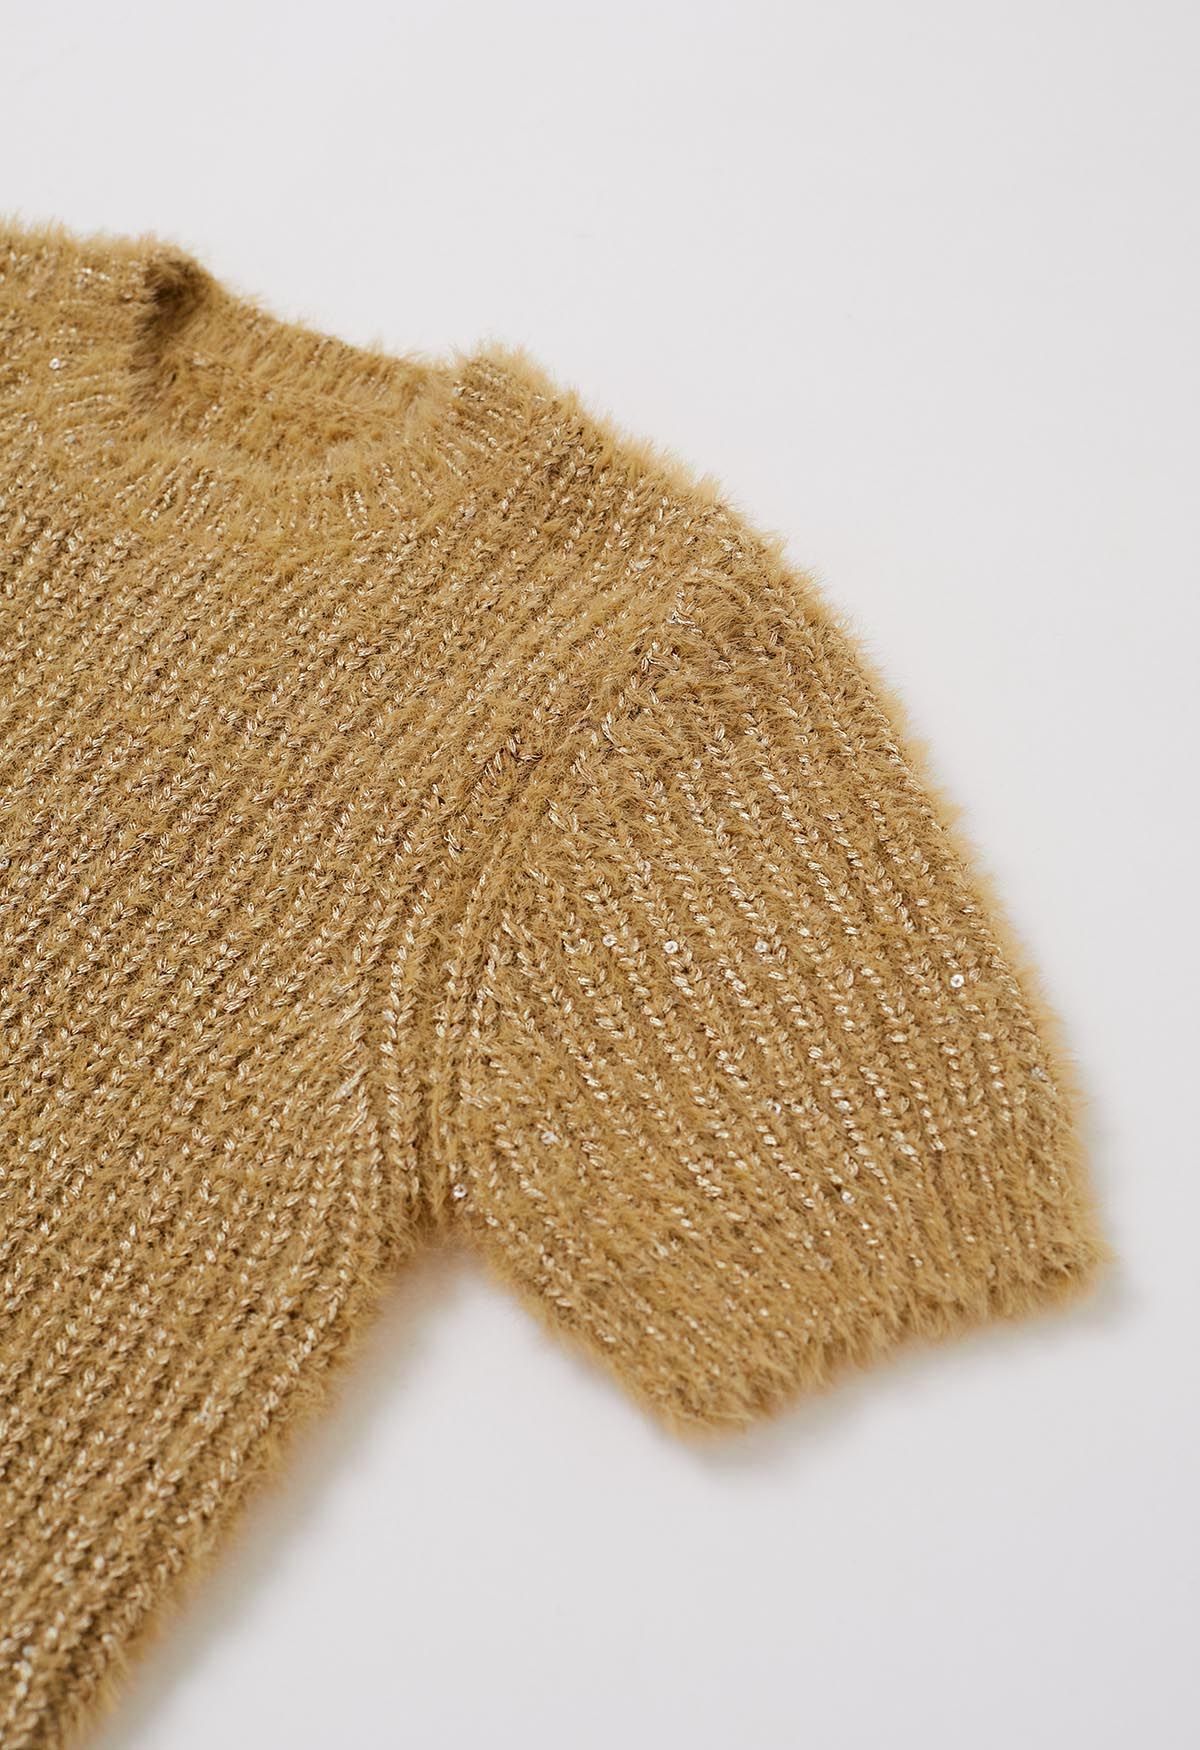 Sequin Fuzzy Short Sleeve Sweater in Camel